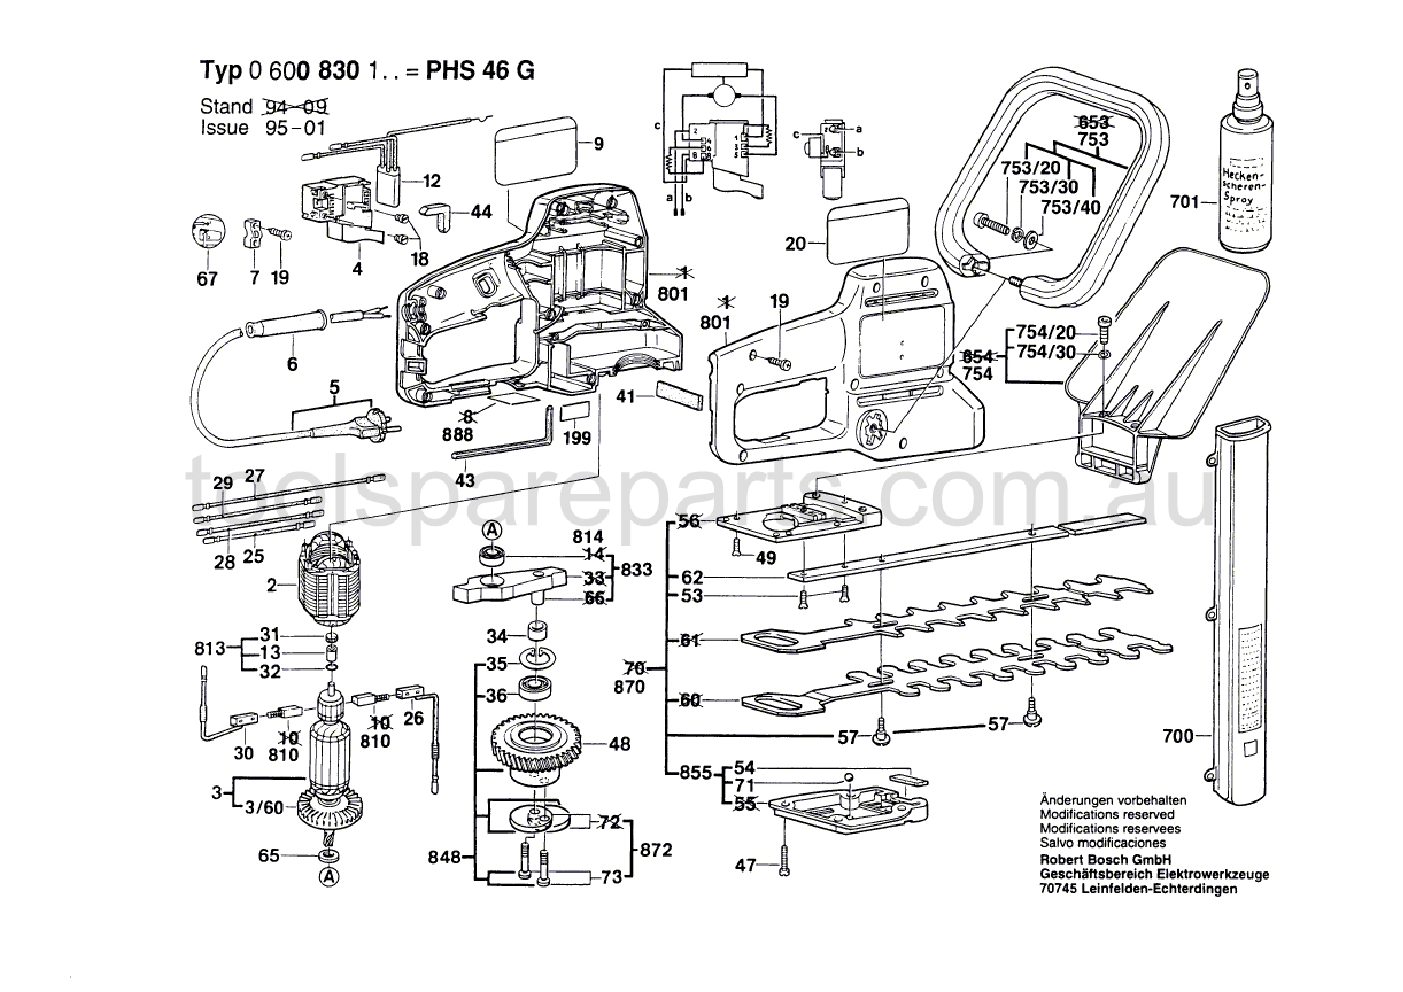 Bosch PHS 46 G 0600830137  Diagram 1